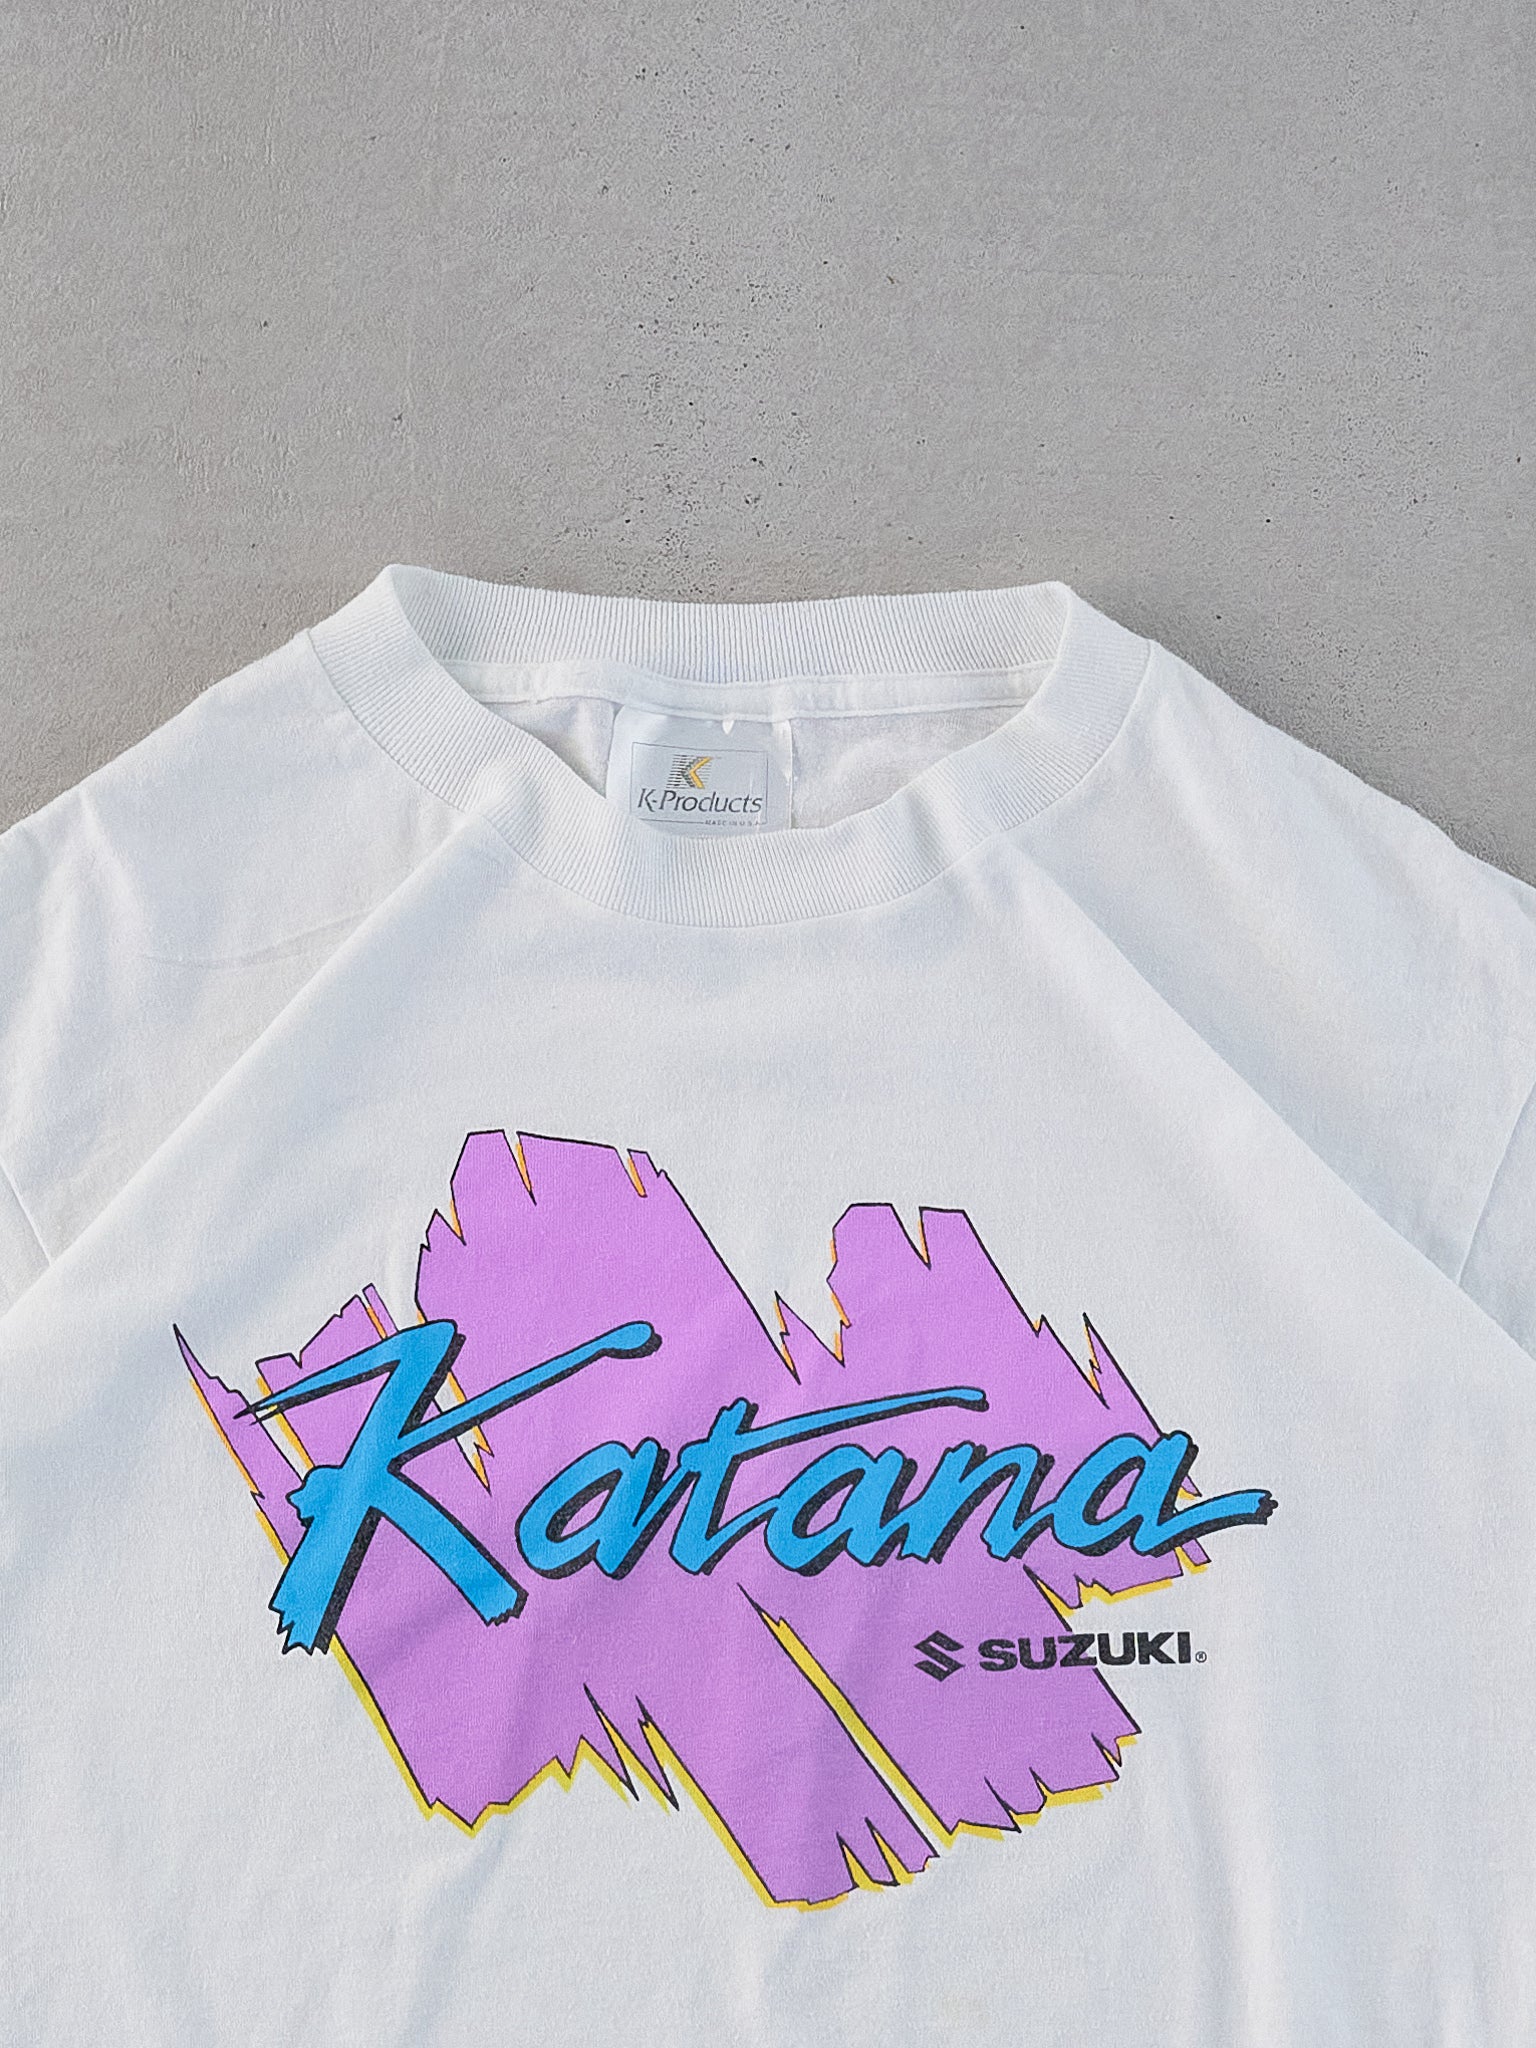 Vintage 90s White Single Stitched Katana Suzuki Graphic Tee (M)